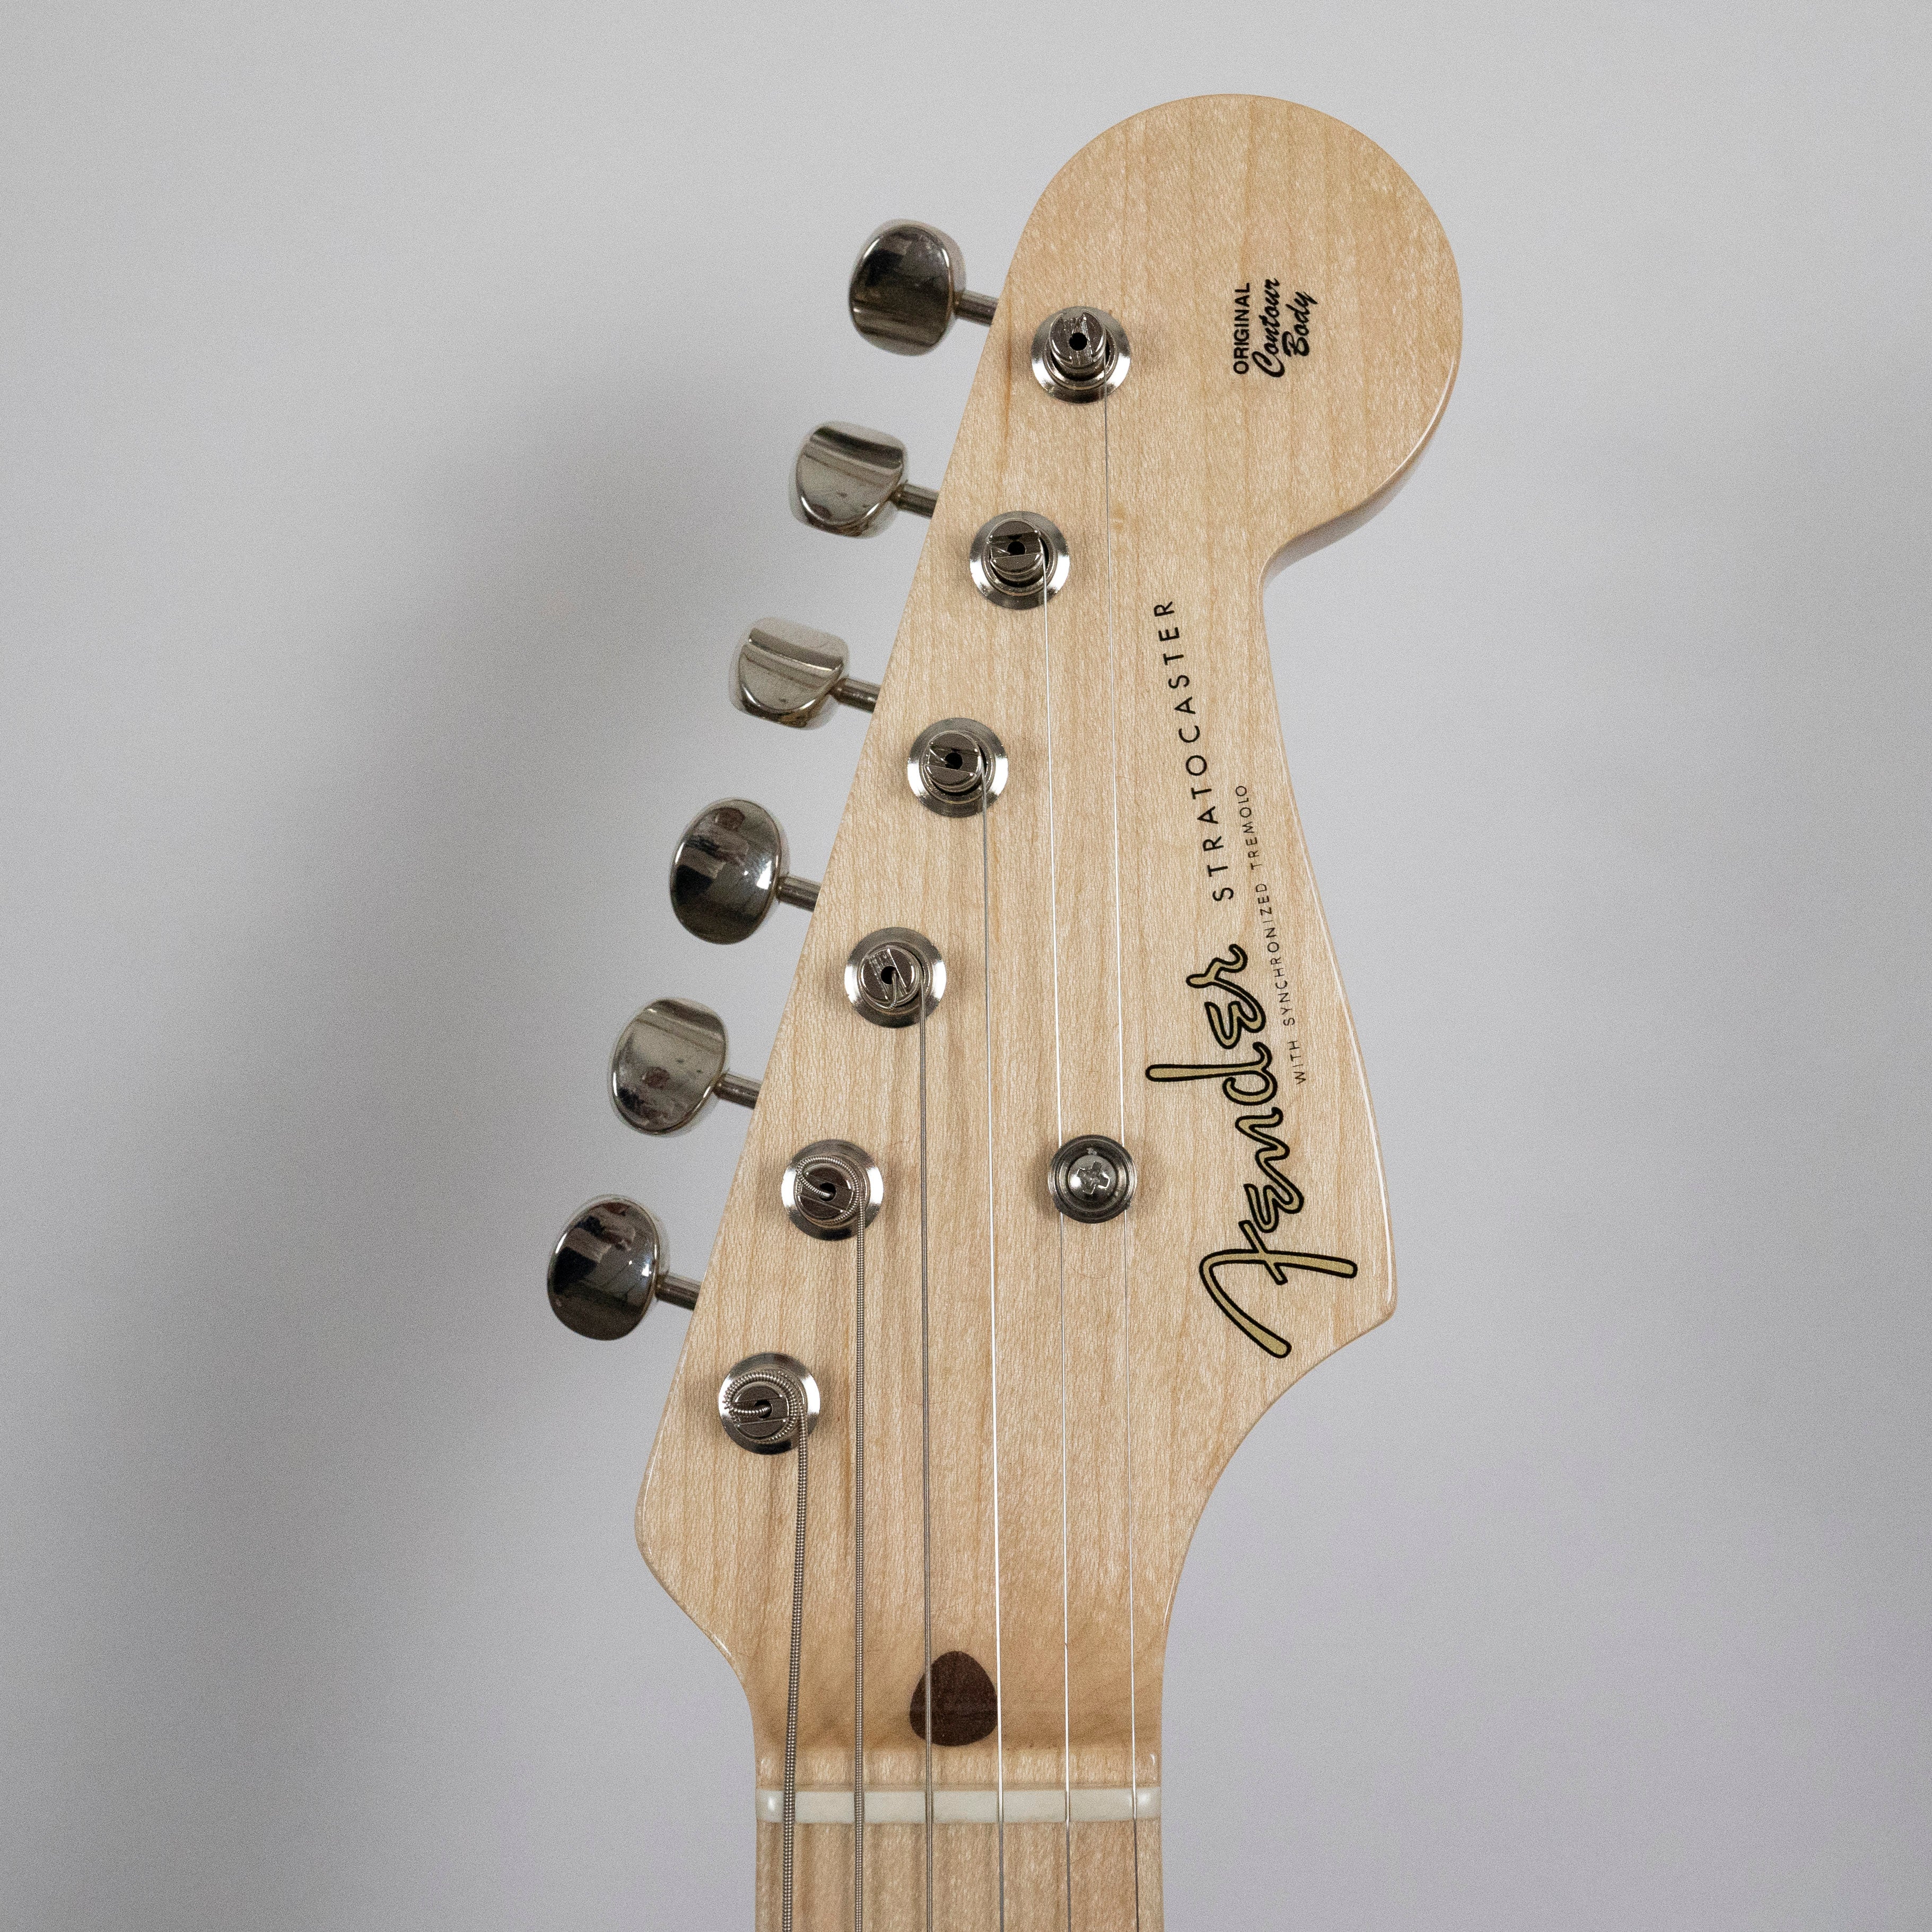 Fender Custom Shop "Rudy's 1955 Strat" Ash in Two-Tone Sunburst